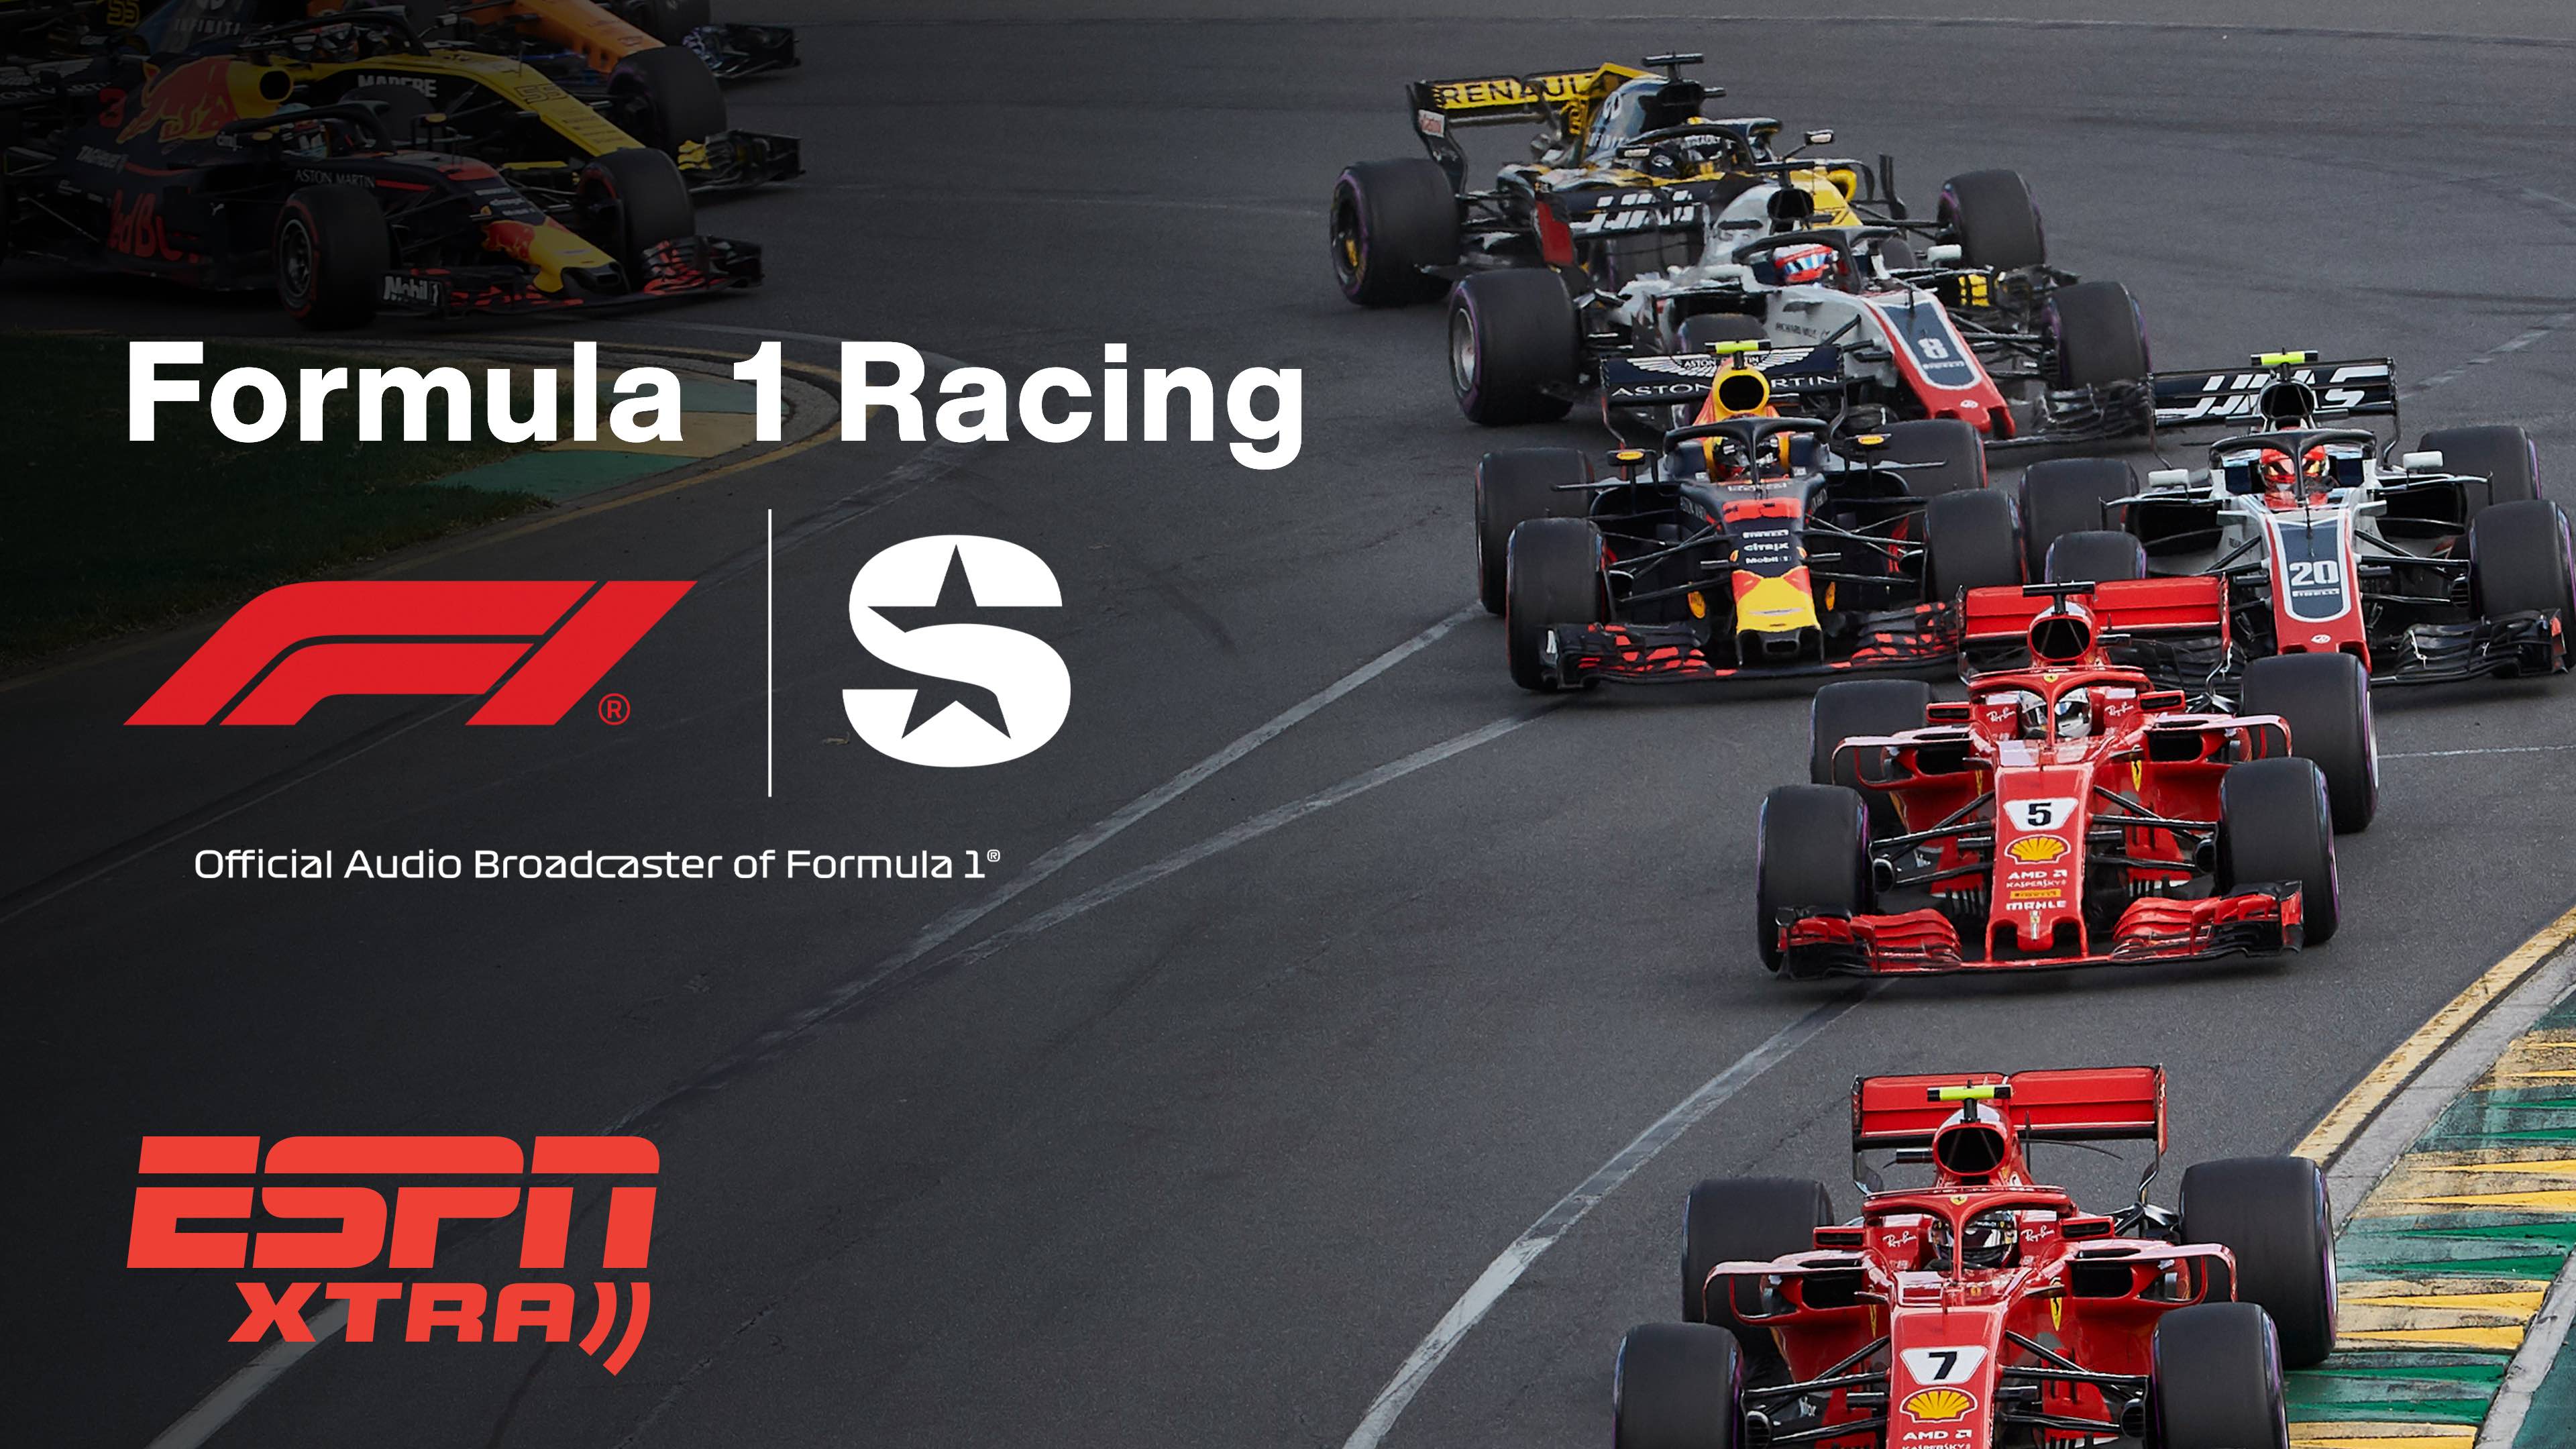 F1 on SiriusXM: Hear Every Formula One Race This Season